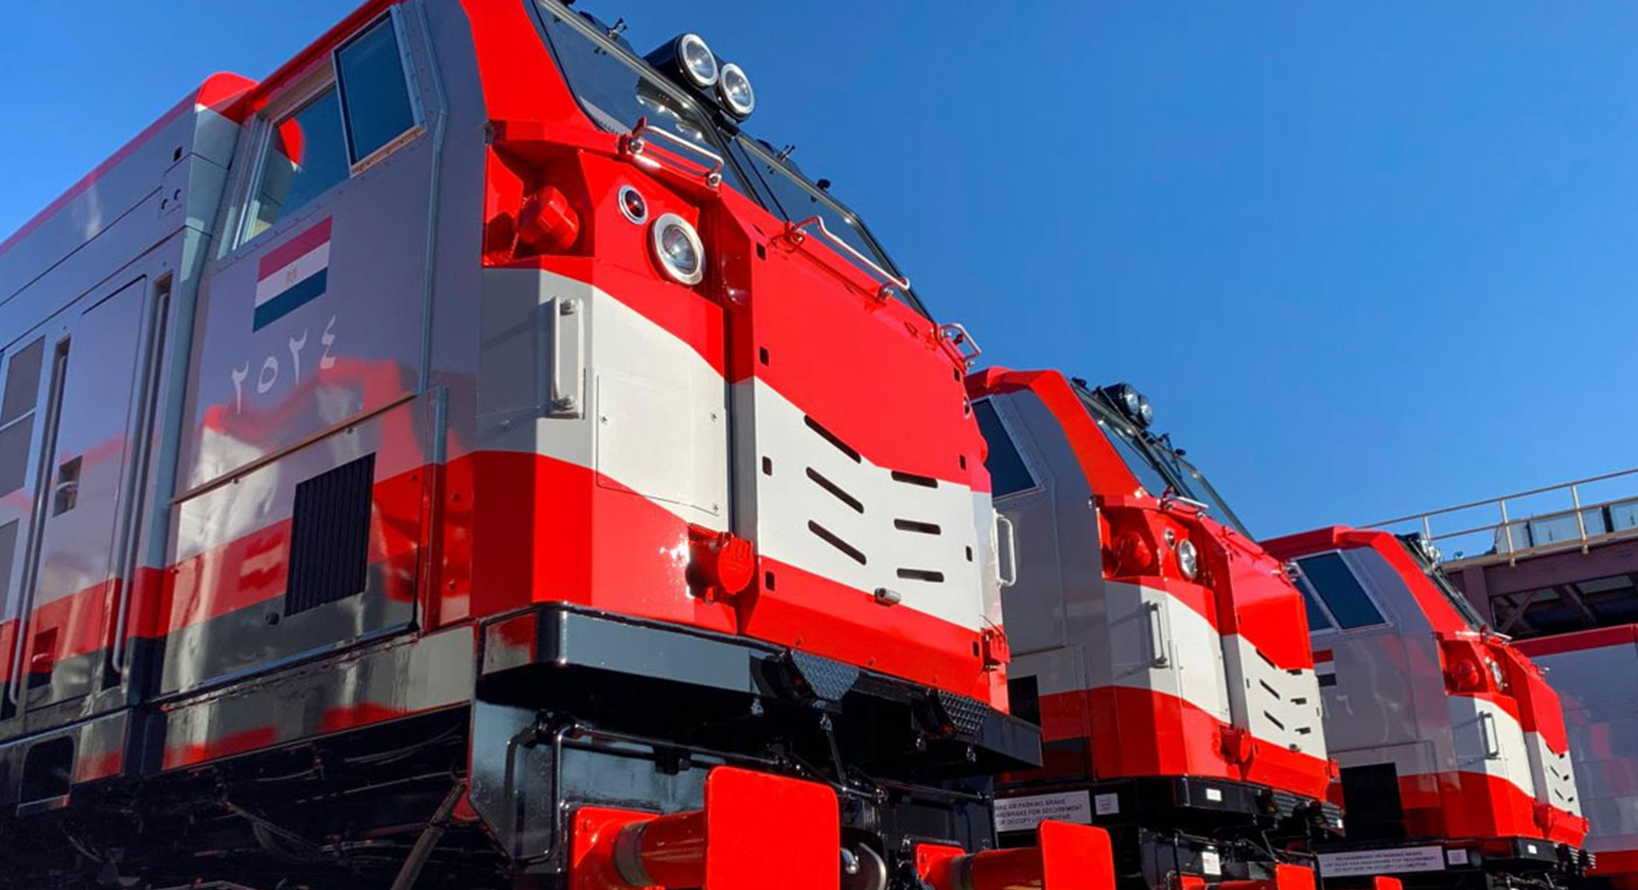 wabtec corporation selects corys to supply two locomotive simulators to egyptian national railways